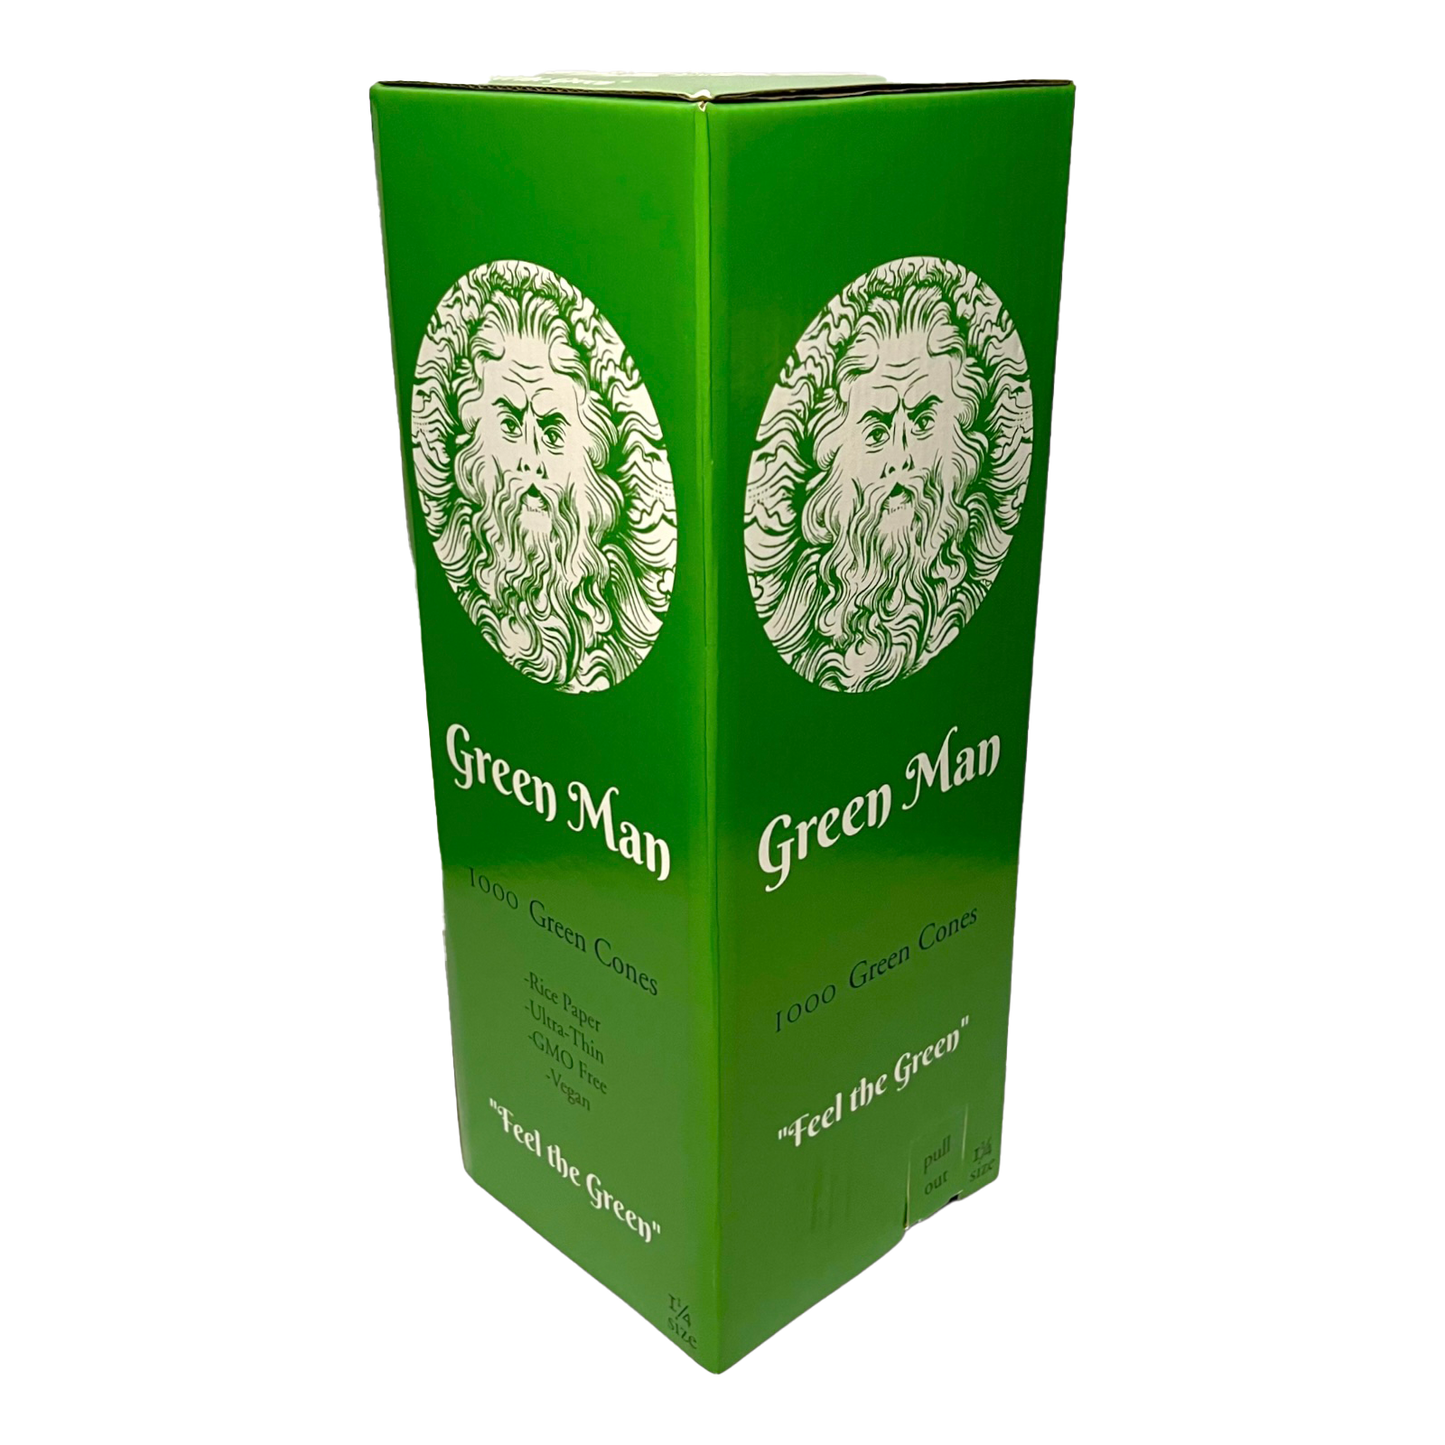 Greenman 1,000ct. Bulk Cones (1.25)